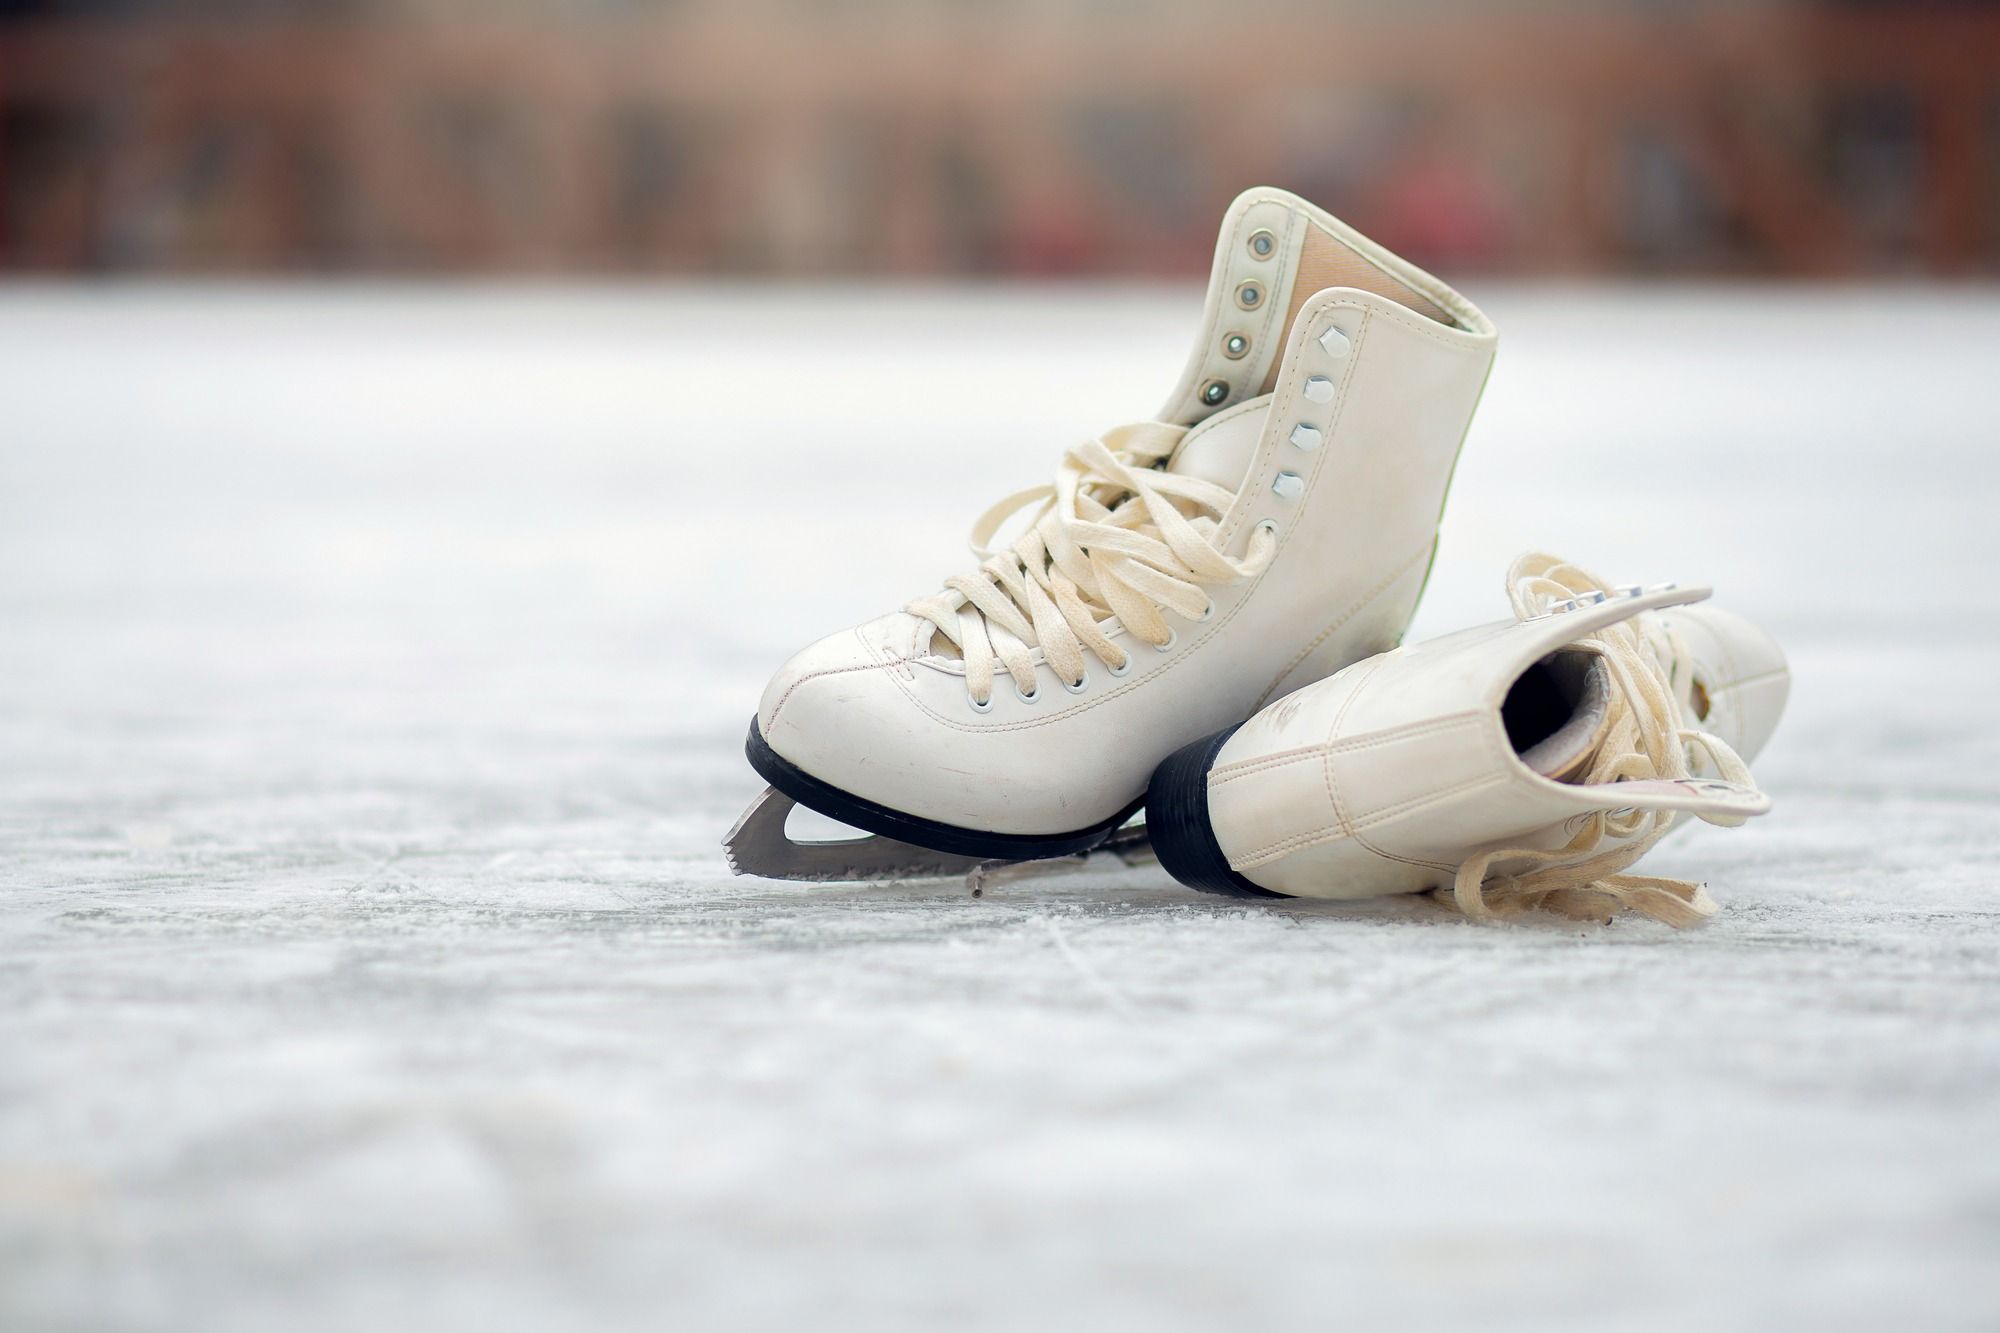 Figure skating shoes regarding the U.S. figure skating association agreeing to lawsuit settlement